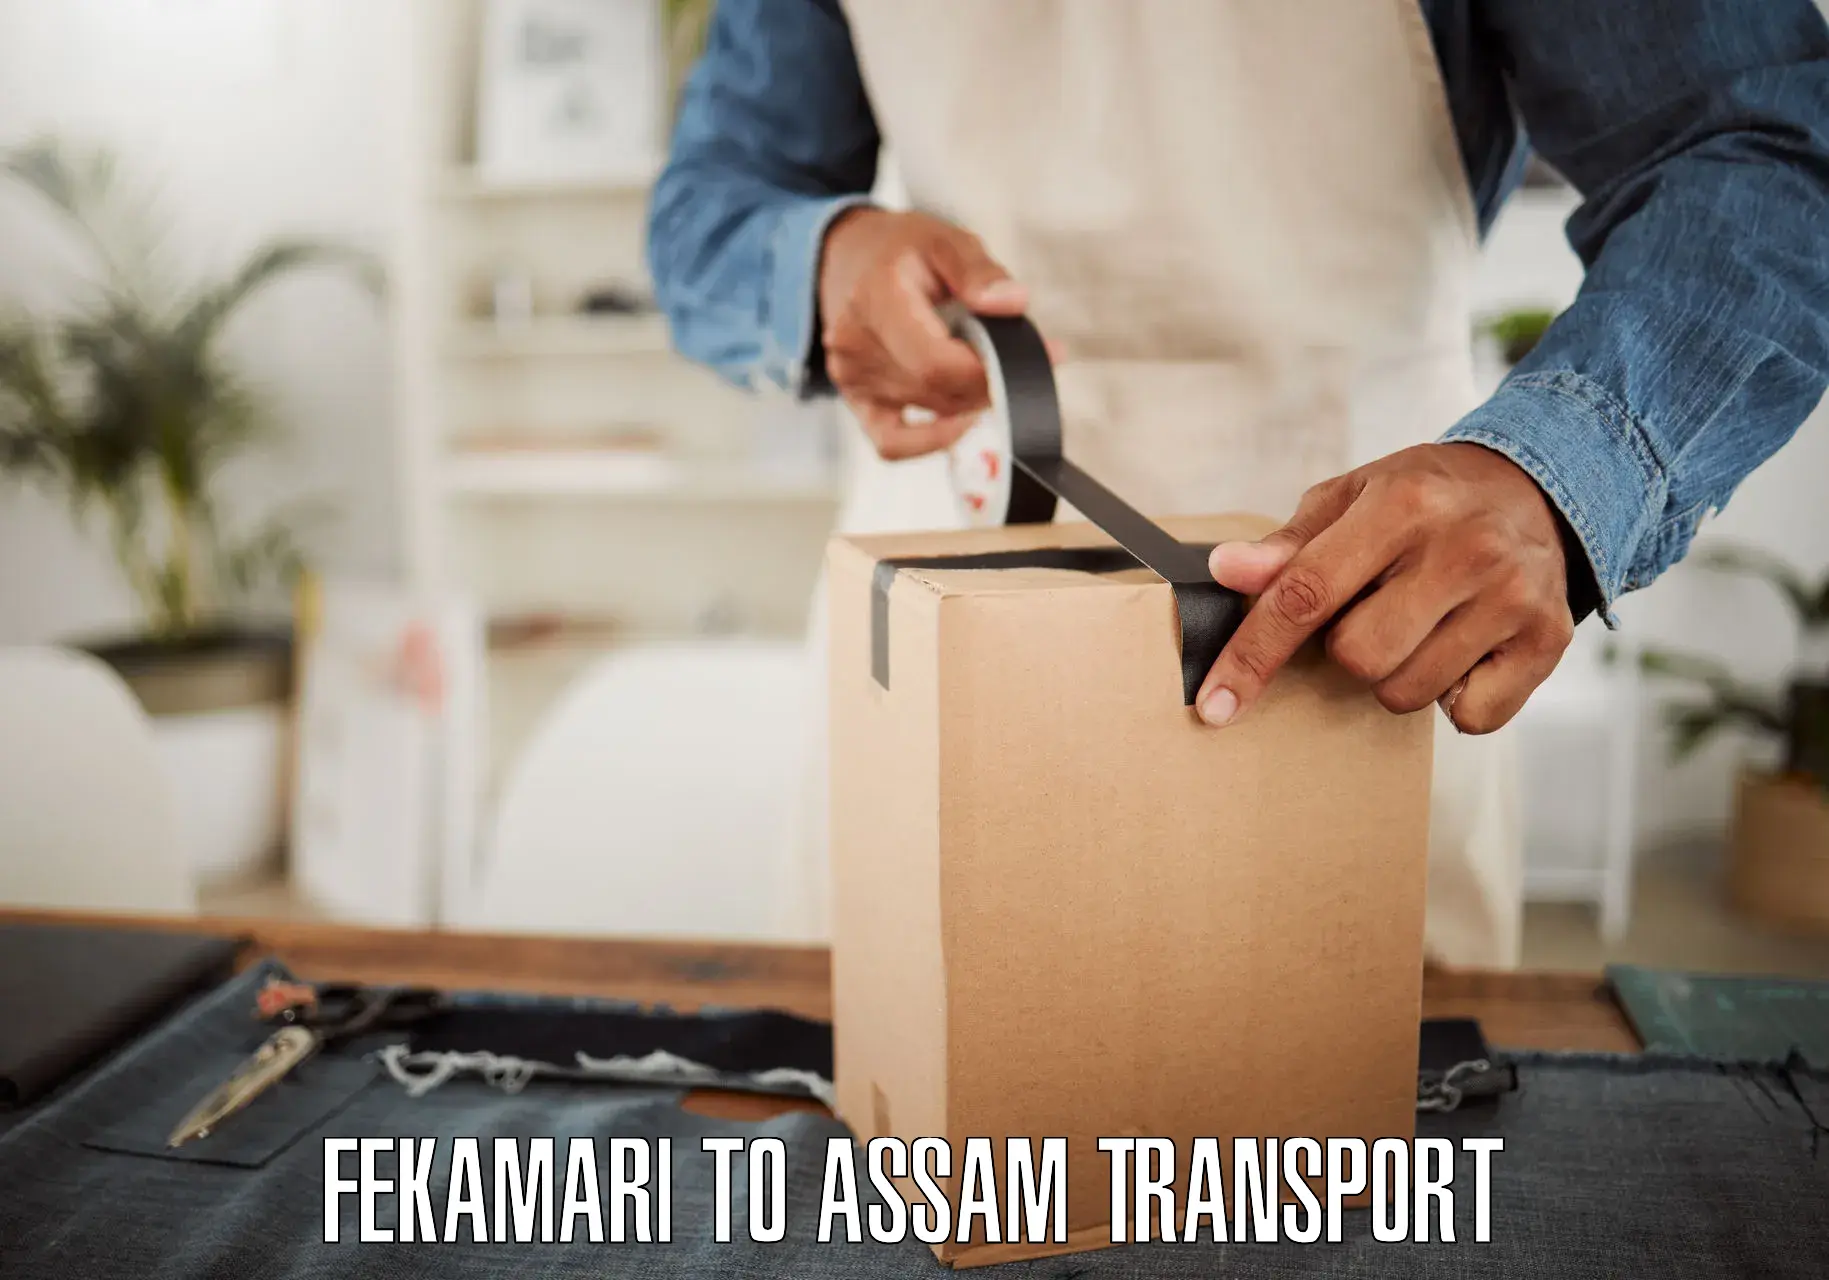 Transport in sharing Fekamari to Doom Dooma